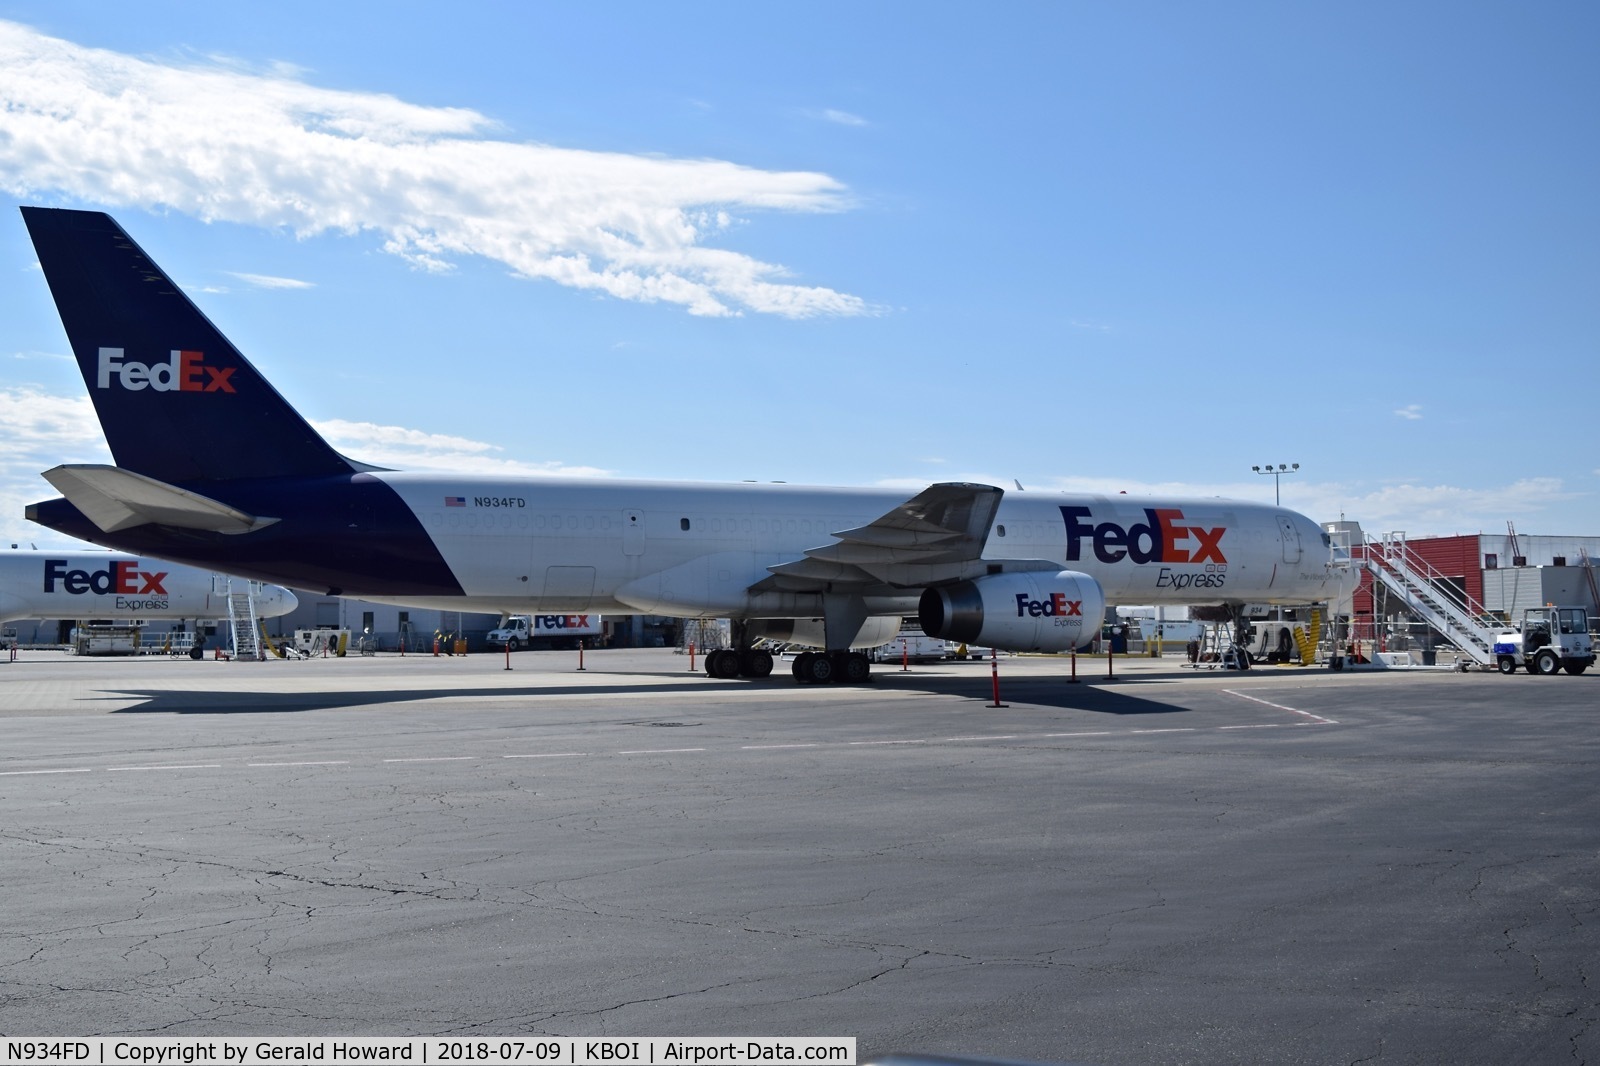 N934FD, 1988 Boeing 757-21B C/N 24331, Parked on the Fed Ex ramp.